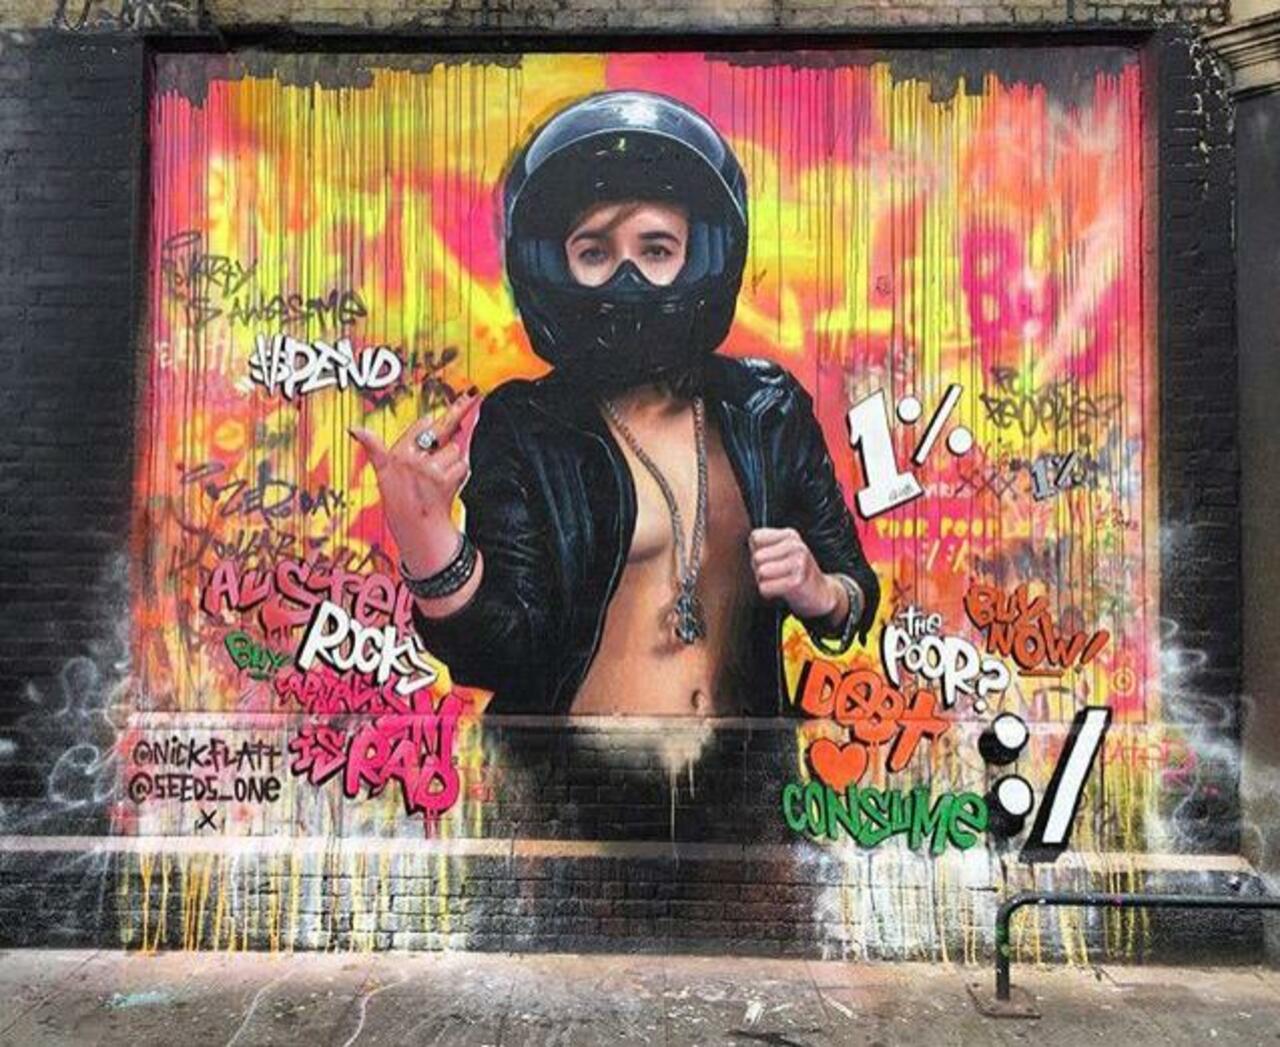 New Street Art collab by Nick Flatt &  Seeds One in London 

#art #graffiti #mural #streetart http://t.co/rBd3OyUijx